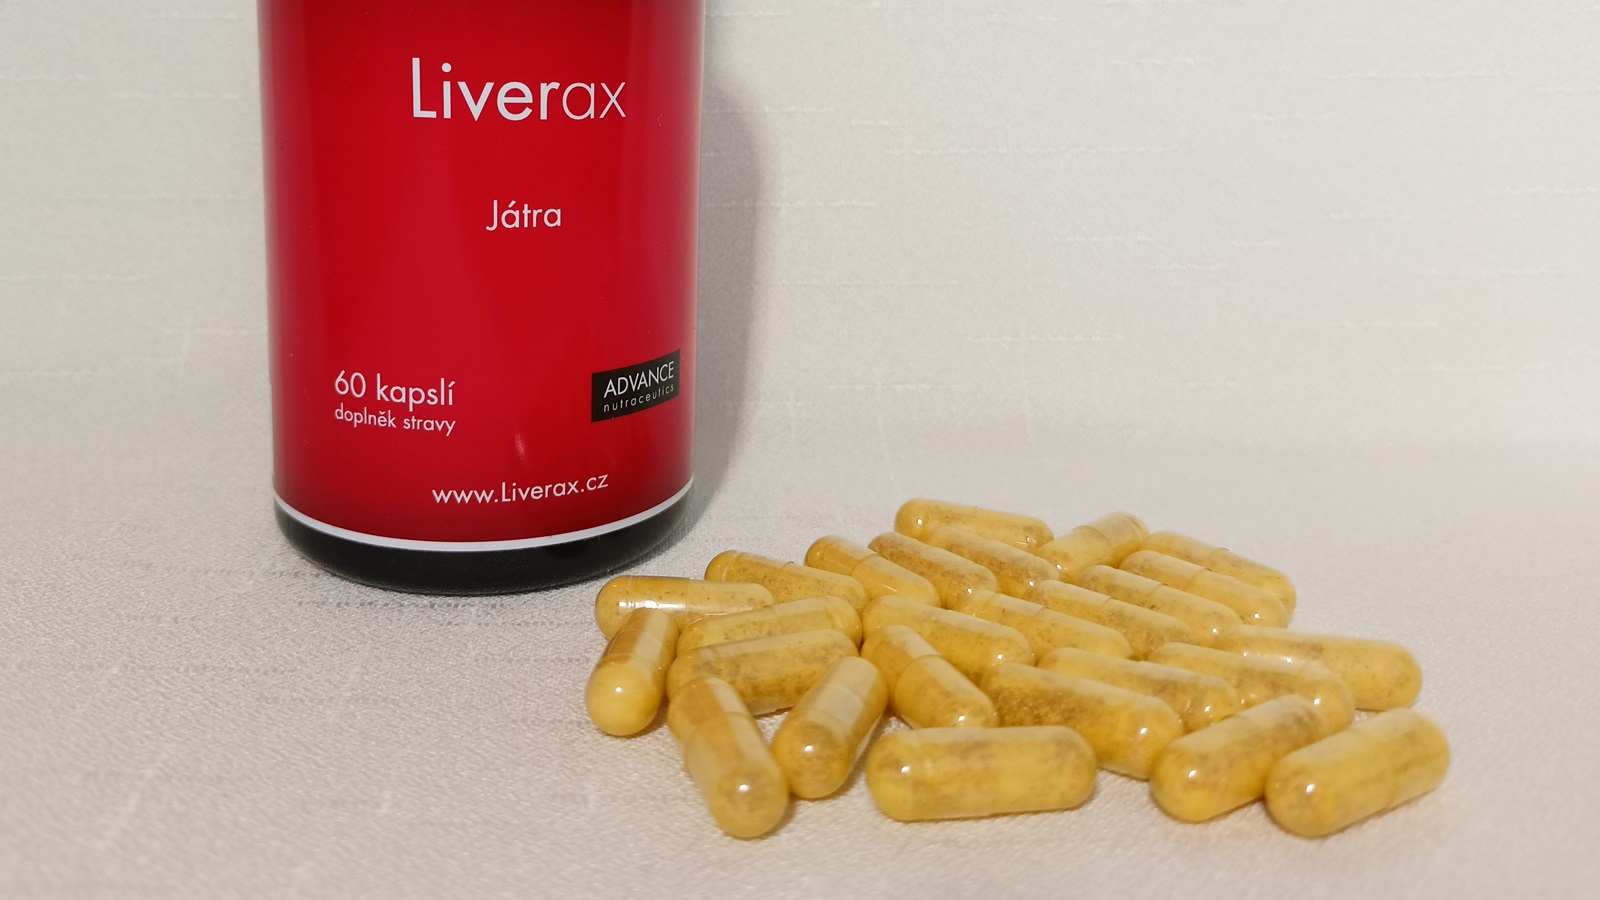 Recenze: Liverax na podporu jater od ADVANCE nutraceutics